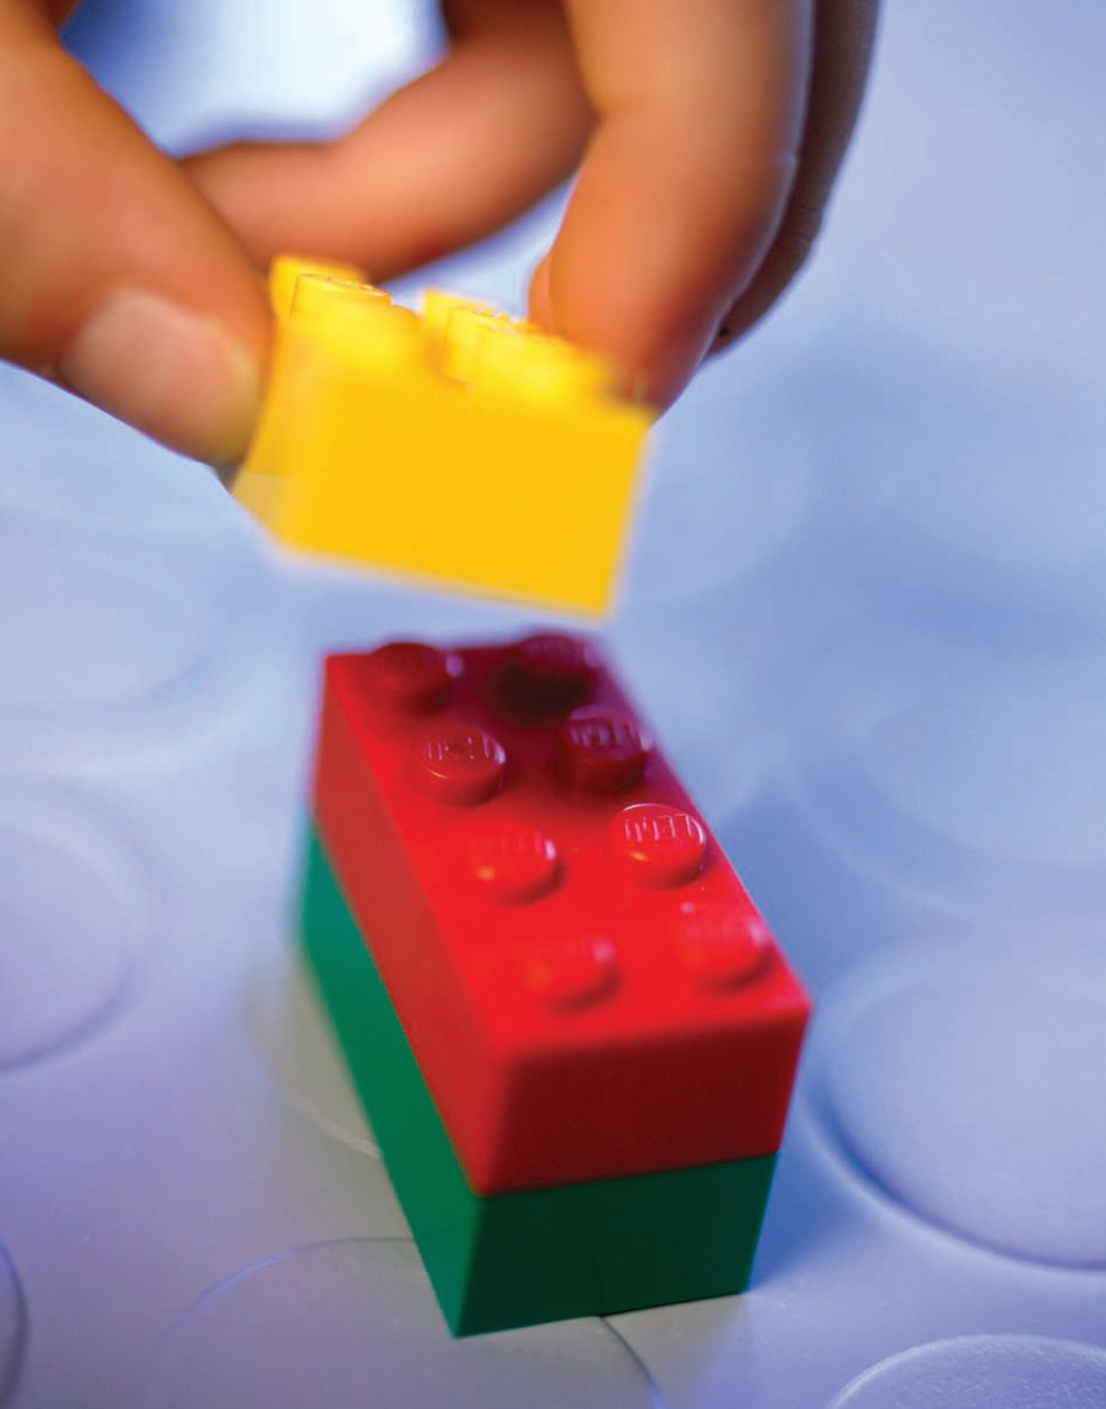 Mattoncini Lego / Lego bricks being stacked. Courtesy: The LEGO Group.